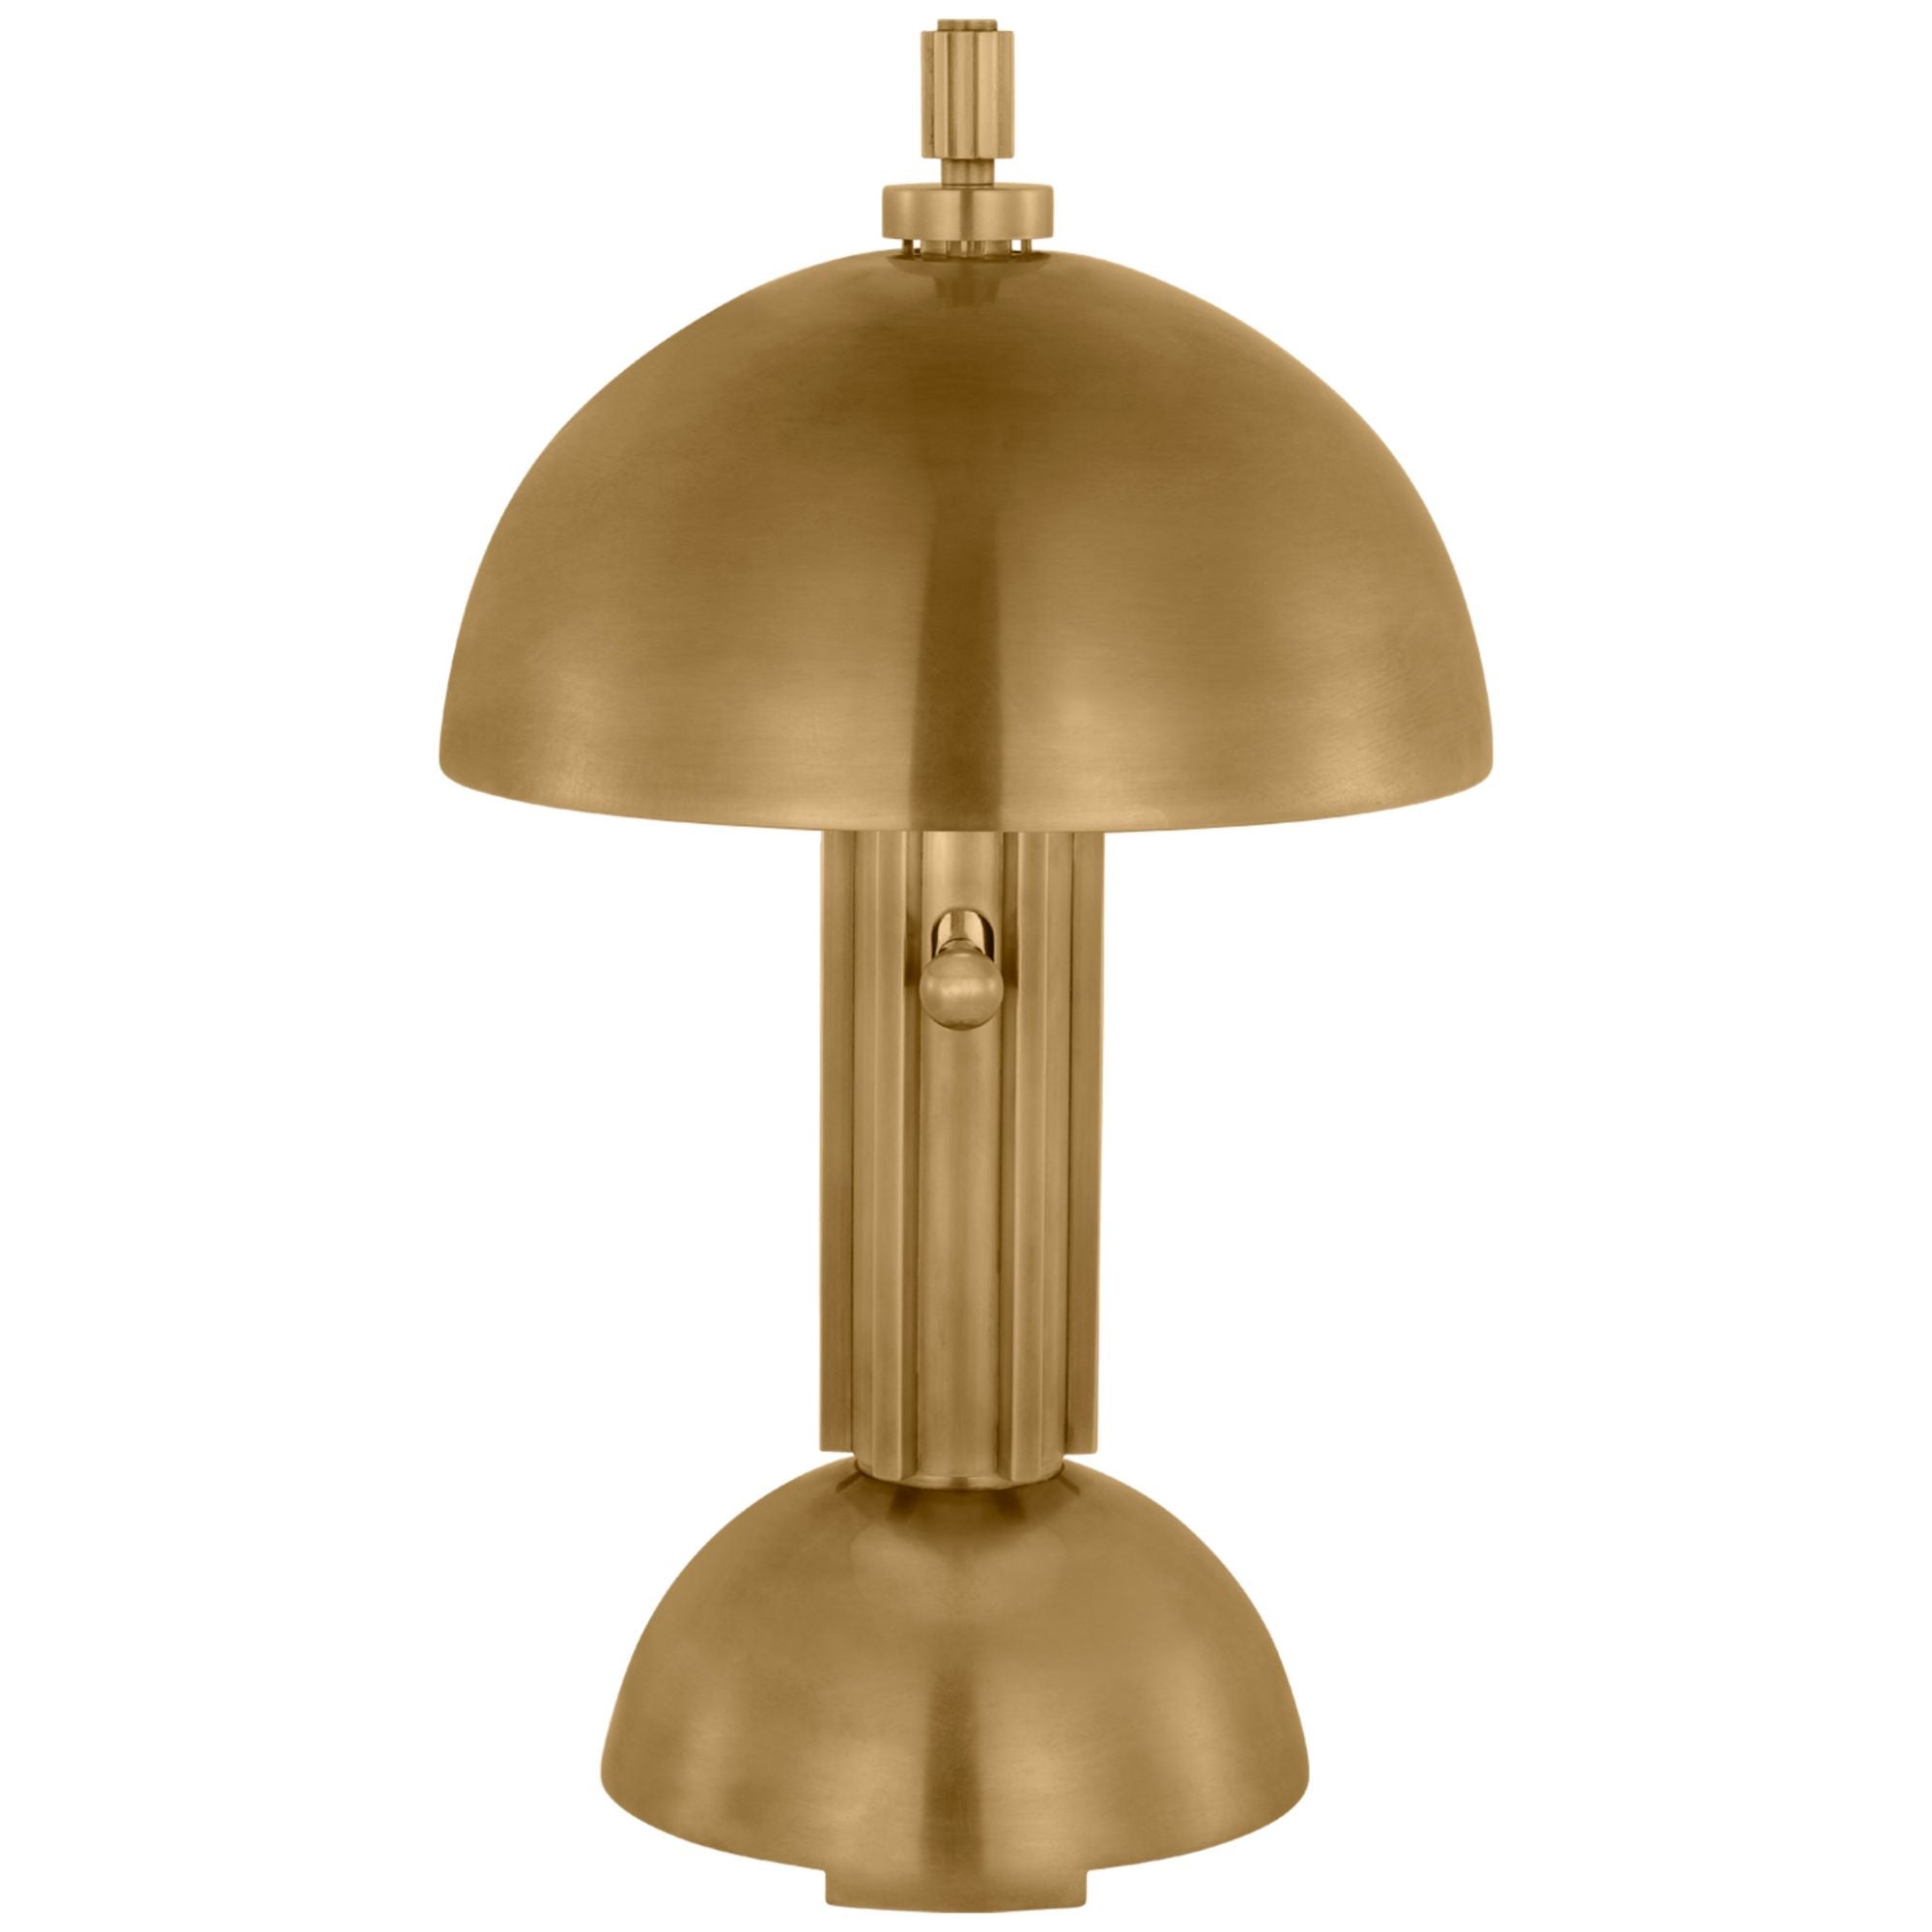 Thomas O'Brien Dally 13" Desk Lamp in Hand-Rubbed Antique Brass